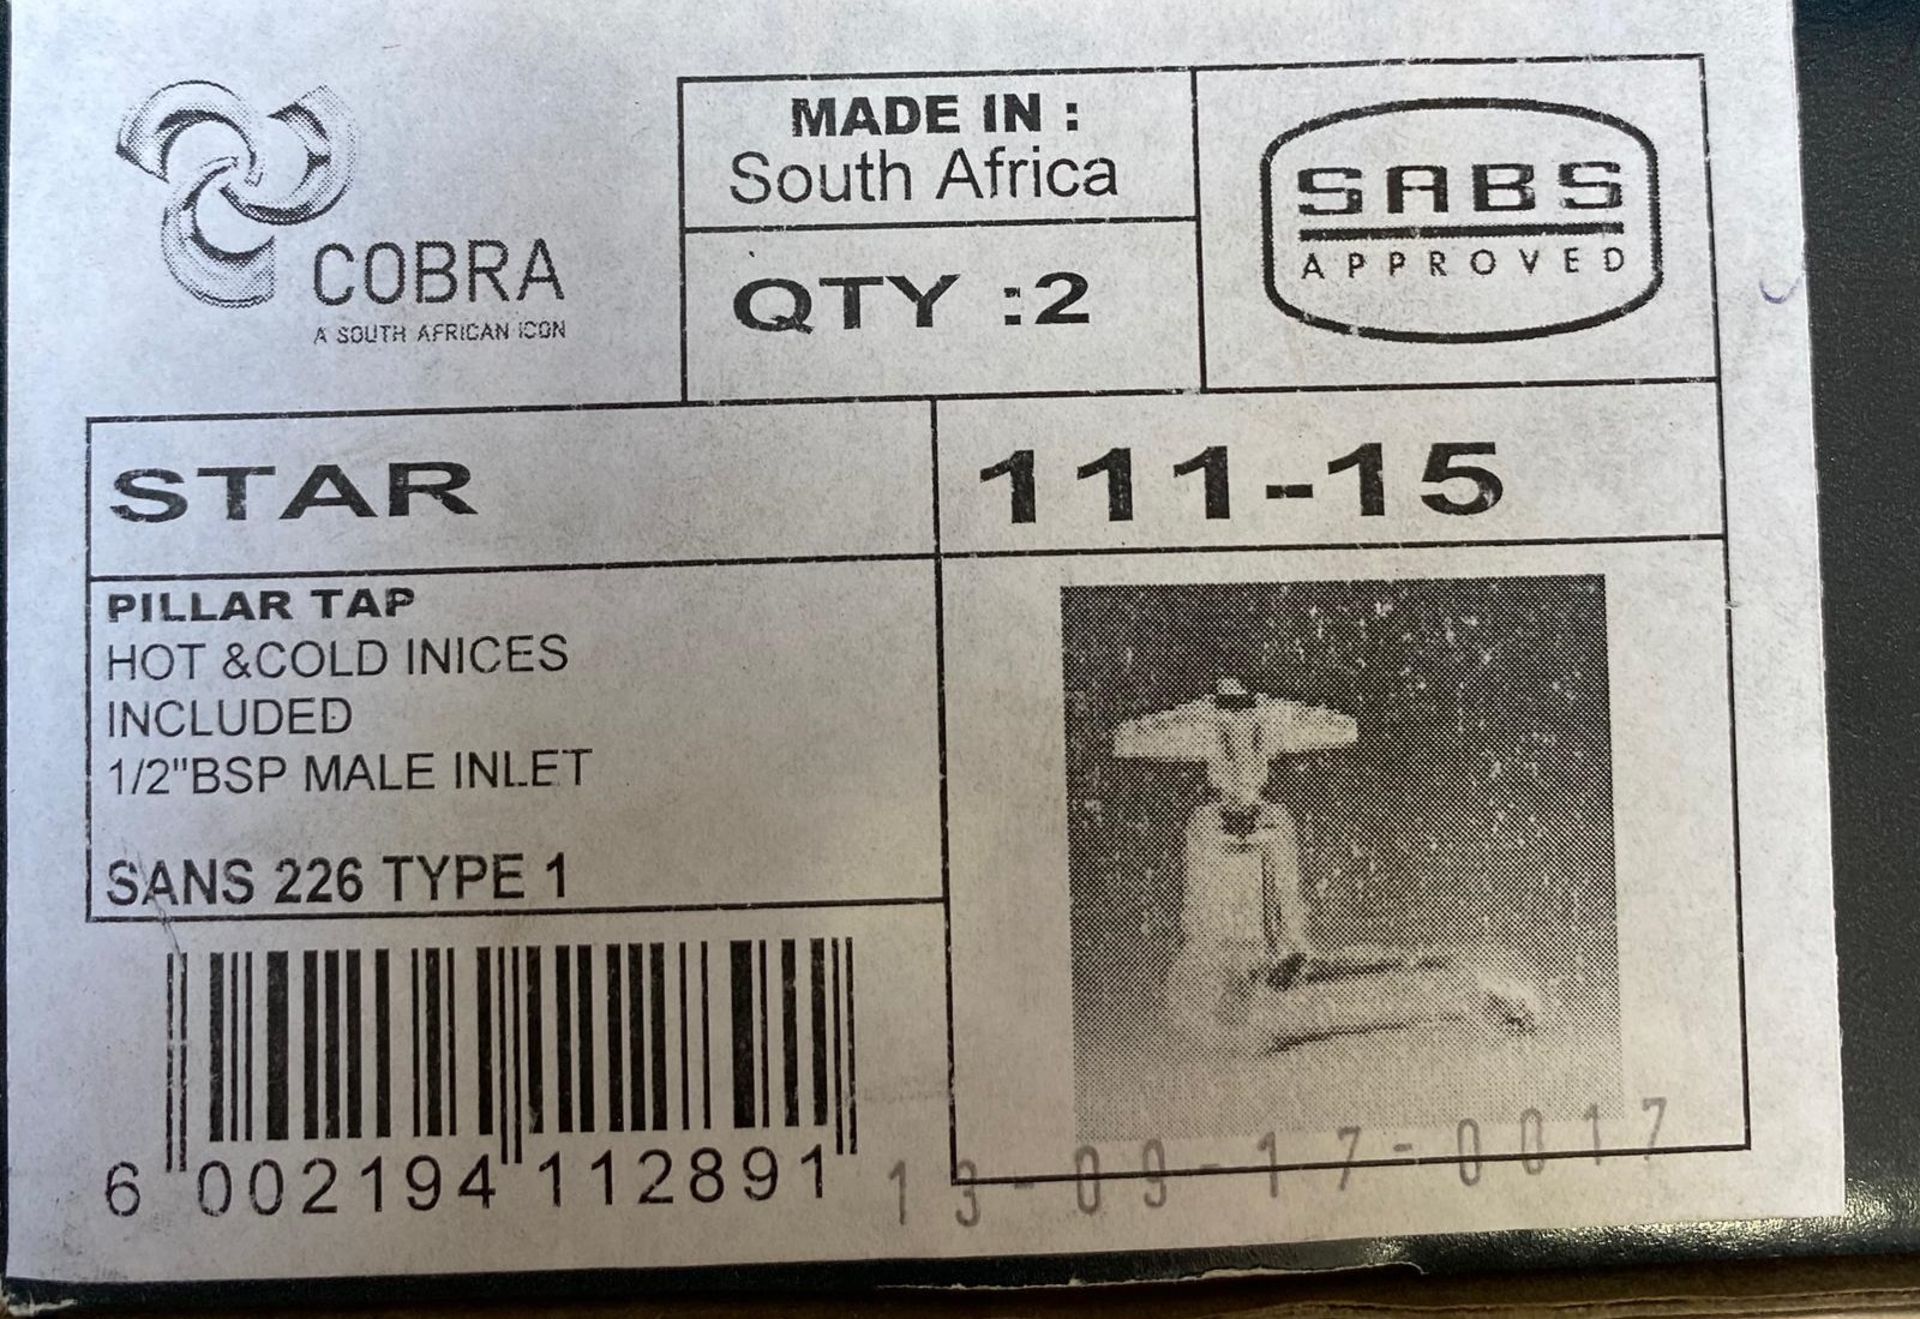 1 x Cobra Pillar Taps - Product Code: 111-15 - New Boxed Stock - Location: Altrincham WA14 - - Image 5 of 5